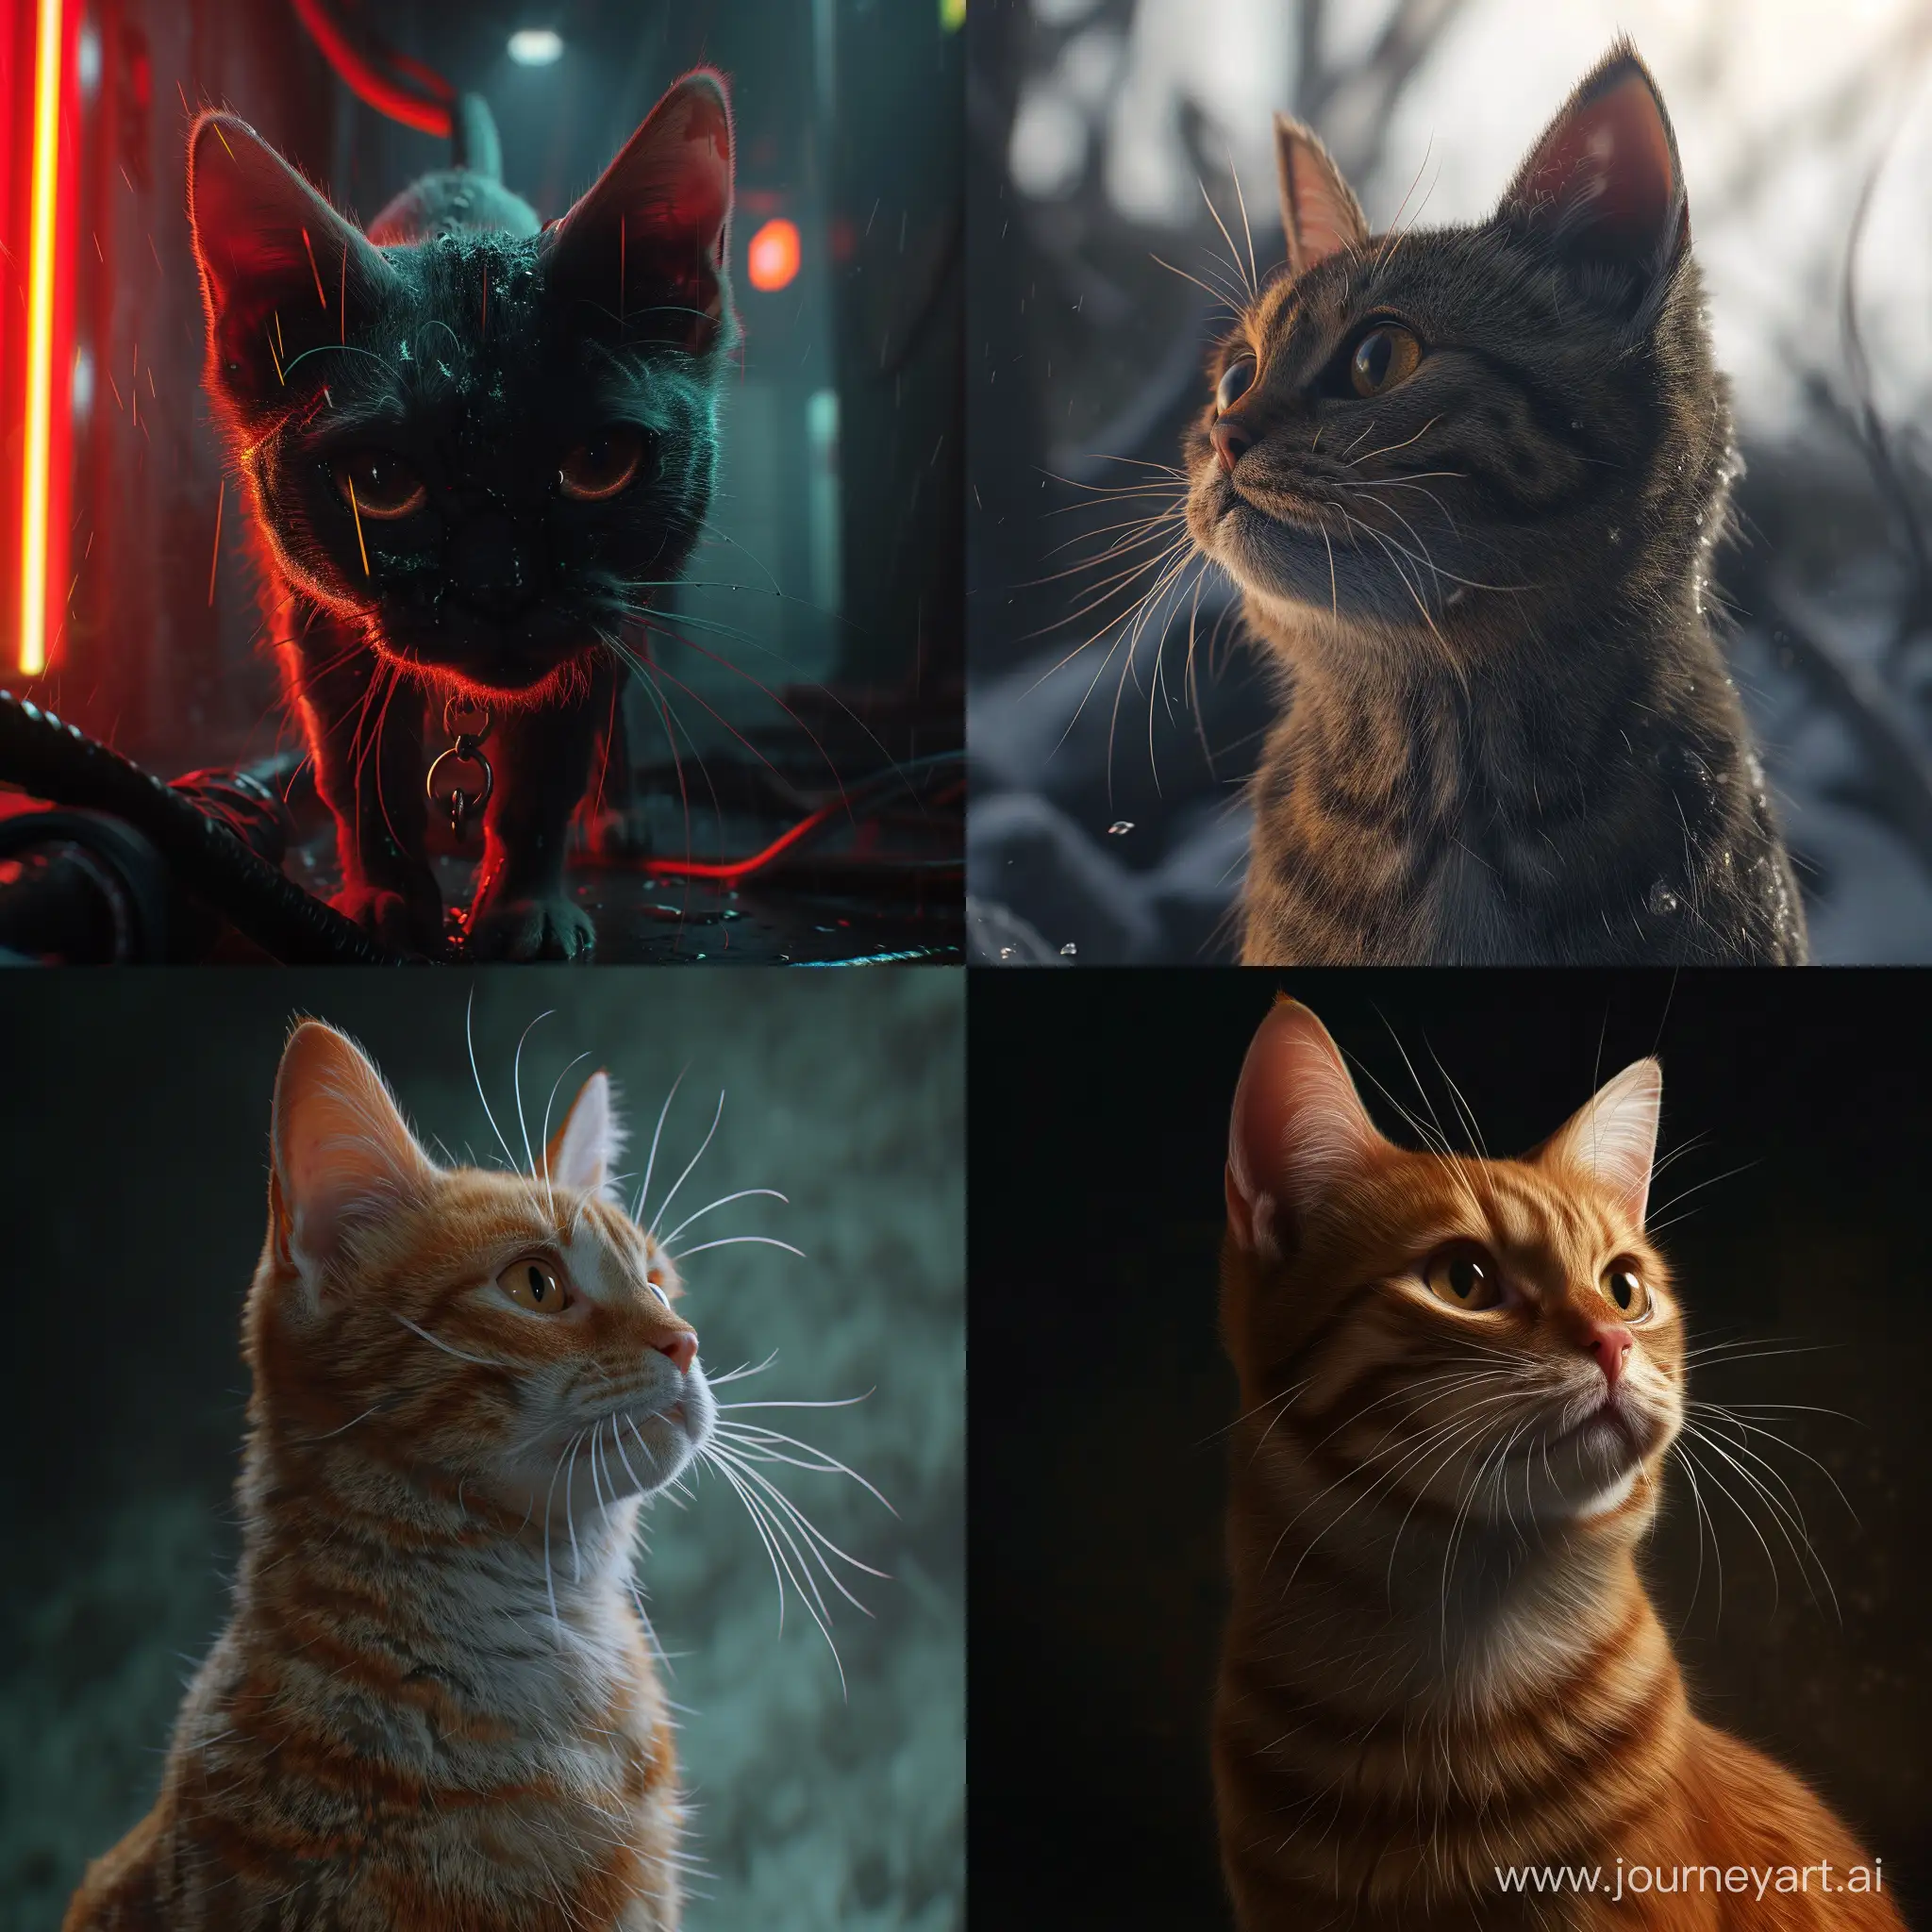 Hyperrealistic-Cat-Game-Programmer-in-Cinematic-11-Photorealistic-Scene